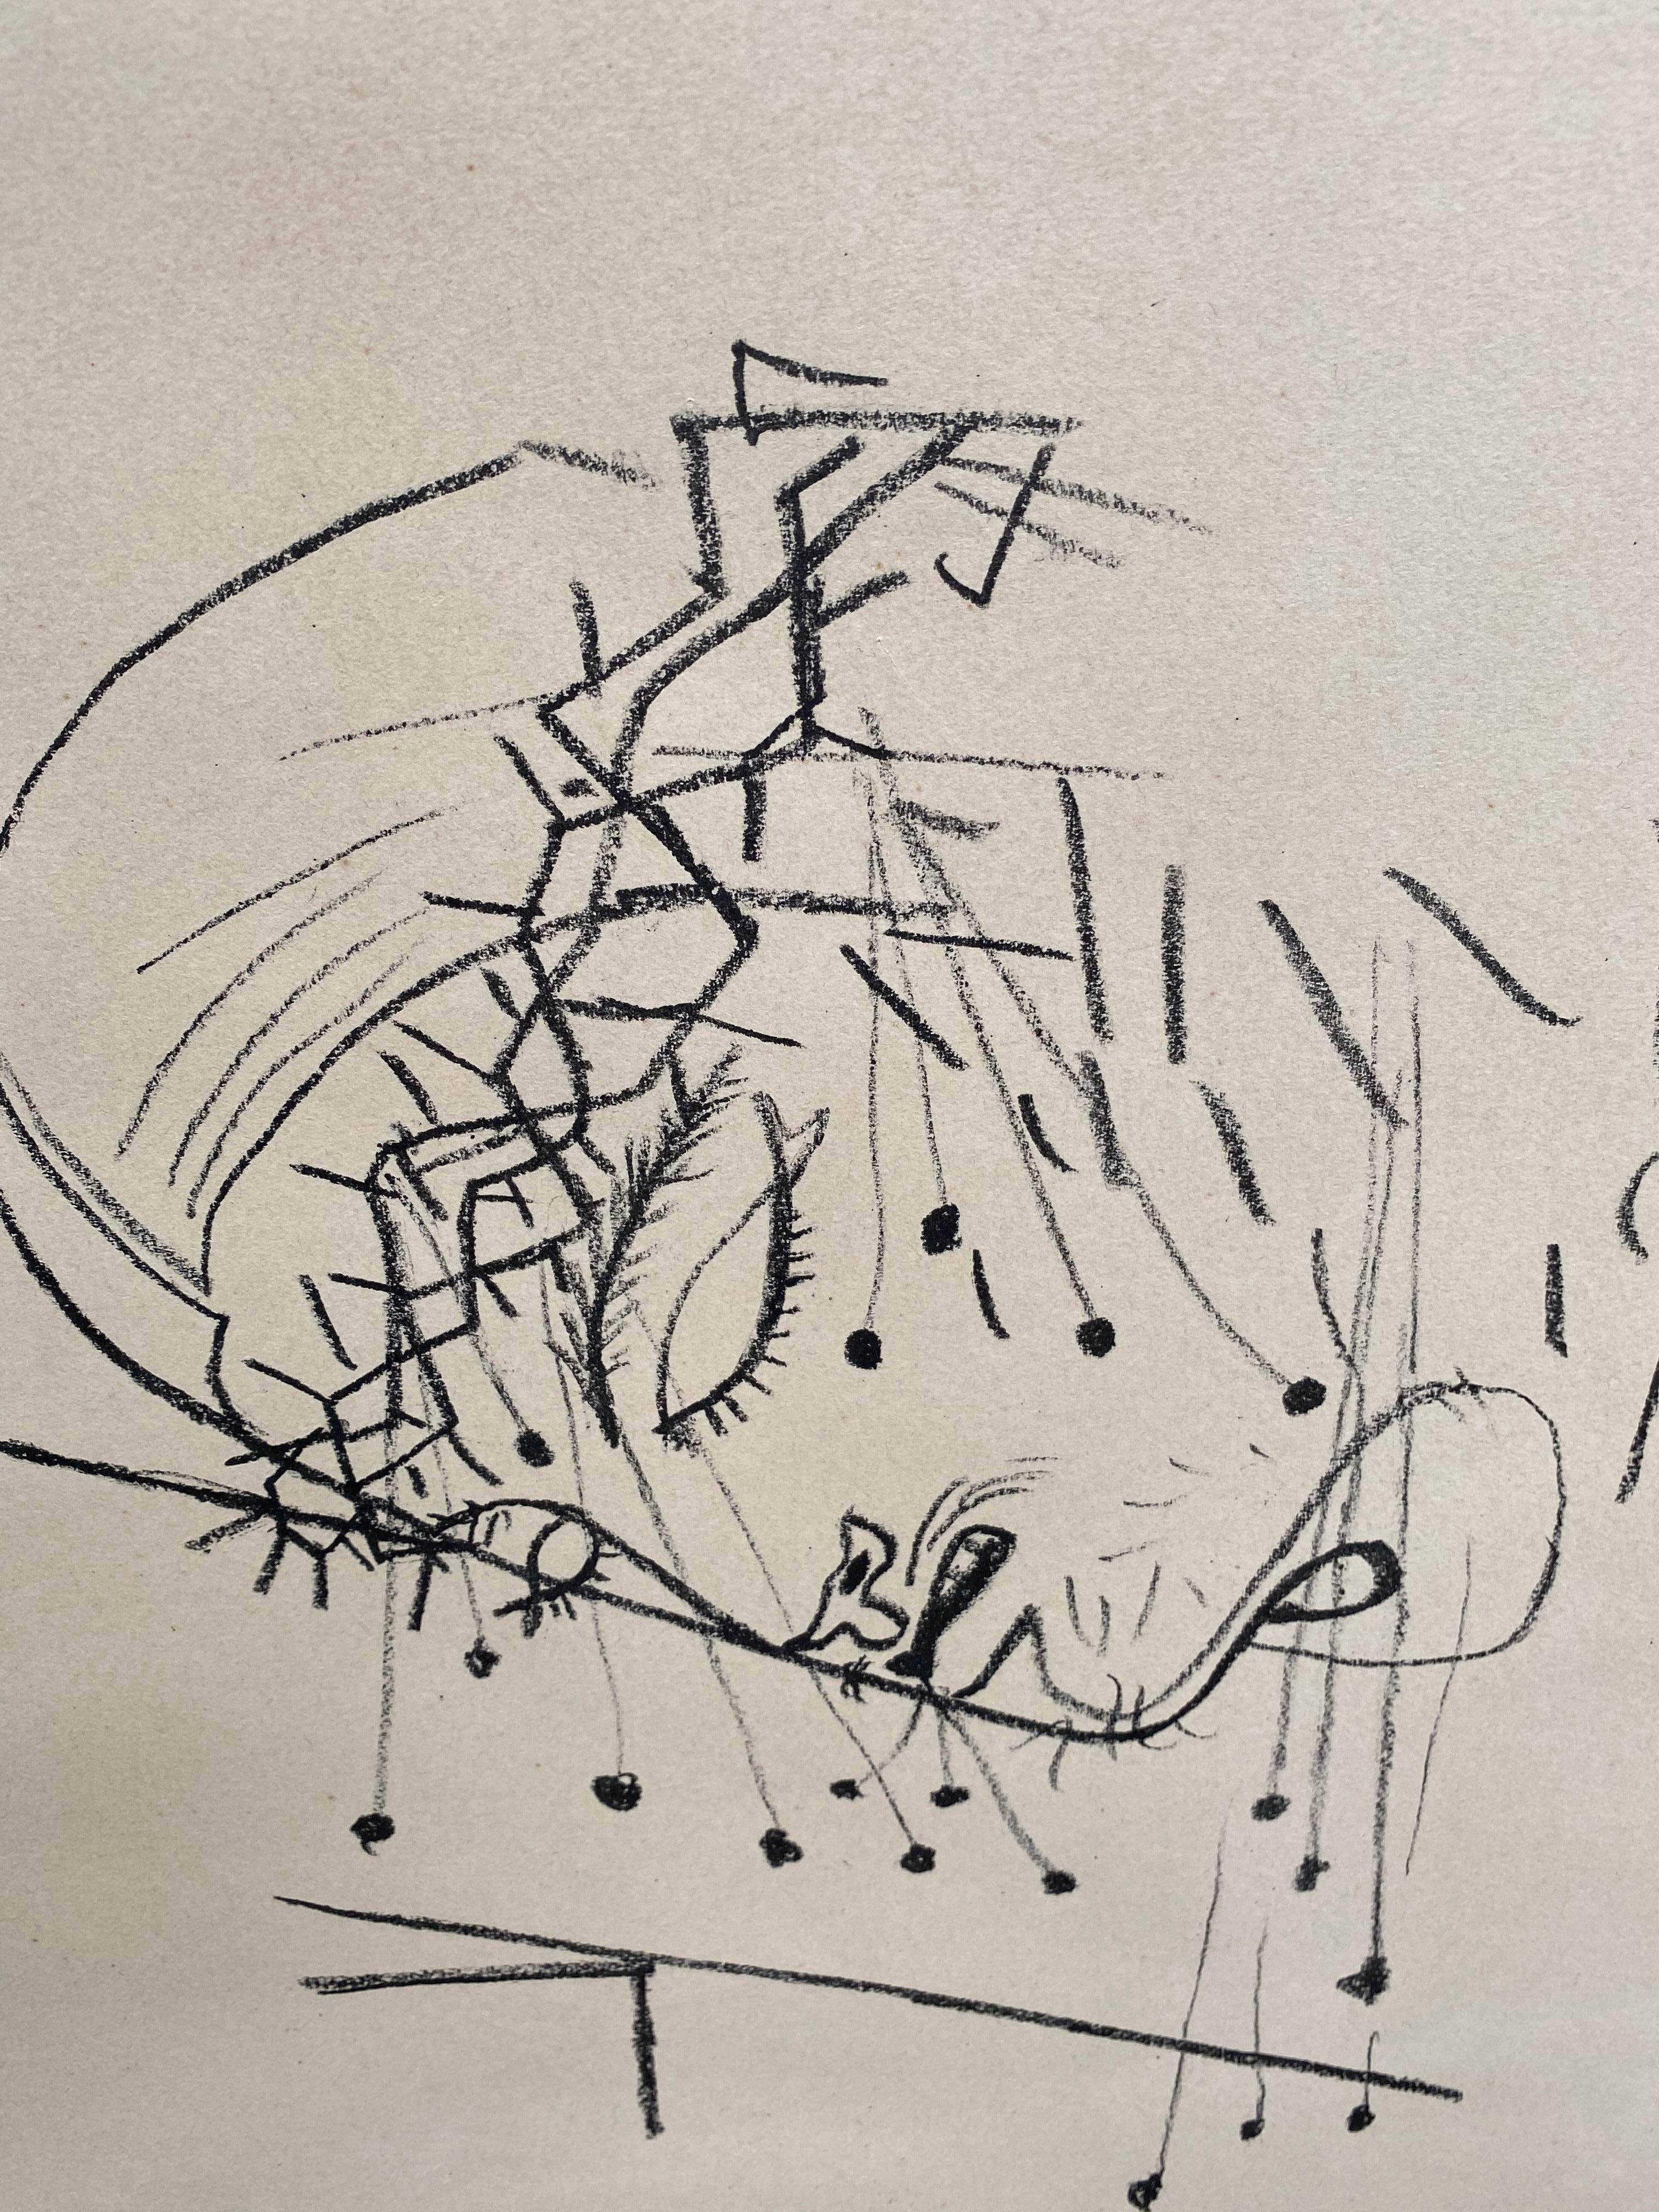 Jean Cocteau 
Christ with the crown of thorns
Charcoal 
Signed and dated 1956 by the artist 
Small tear in the margin (not visible at the frame). 
64,5 x 49 cms
3500 euros 
Jean Cocteau 
Christ à la couronne d’épines
Fusain 
Signé et daté 1956 par